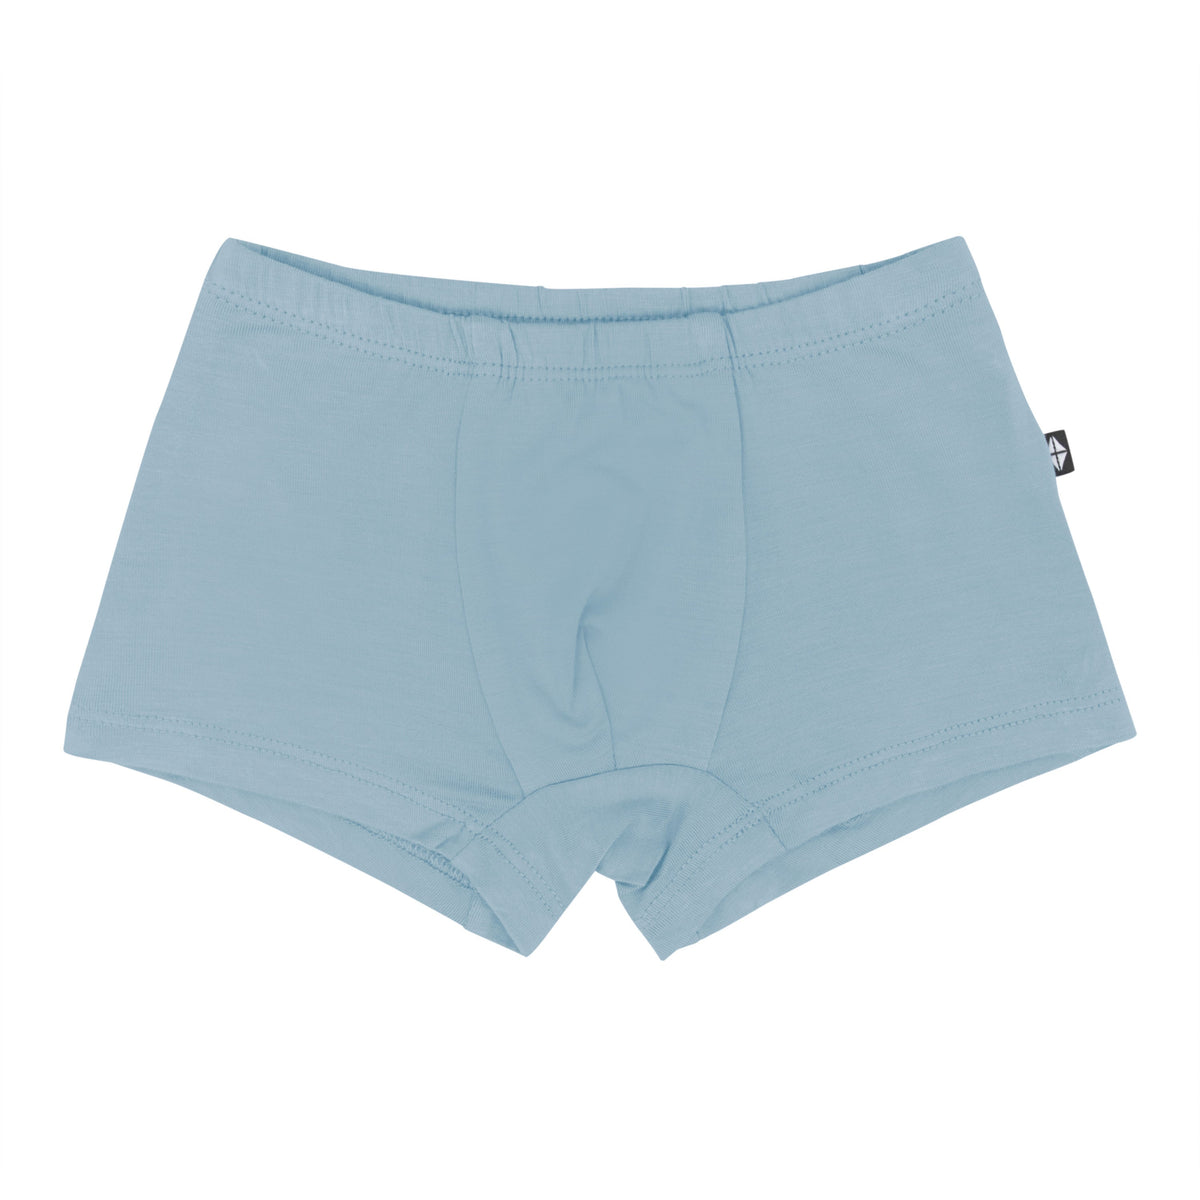 Kyte Baby Underwear Briefs in Dusty Blue